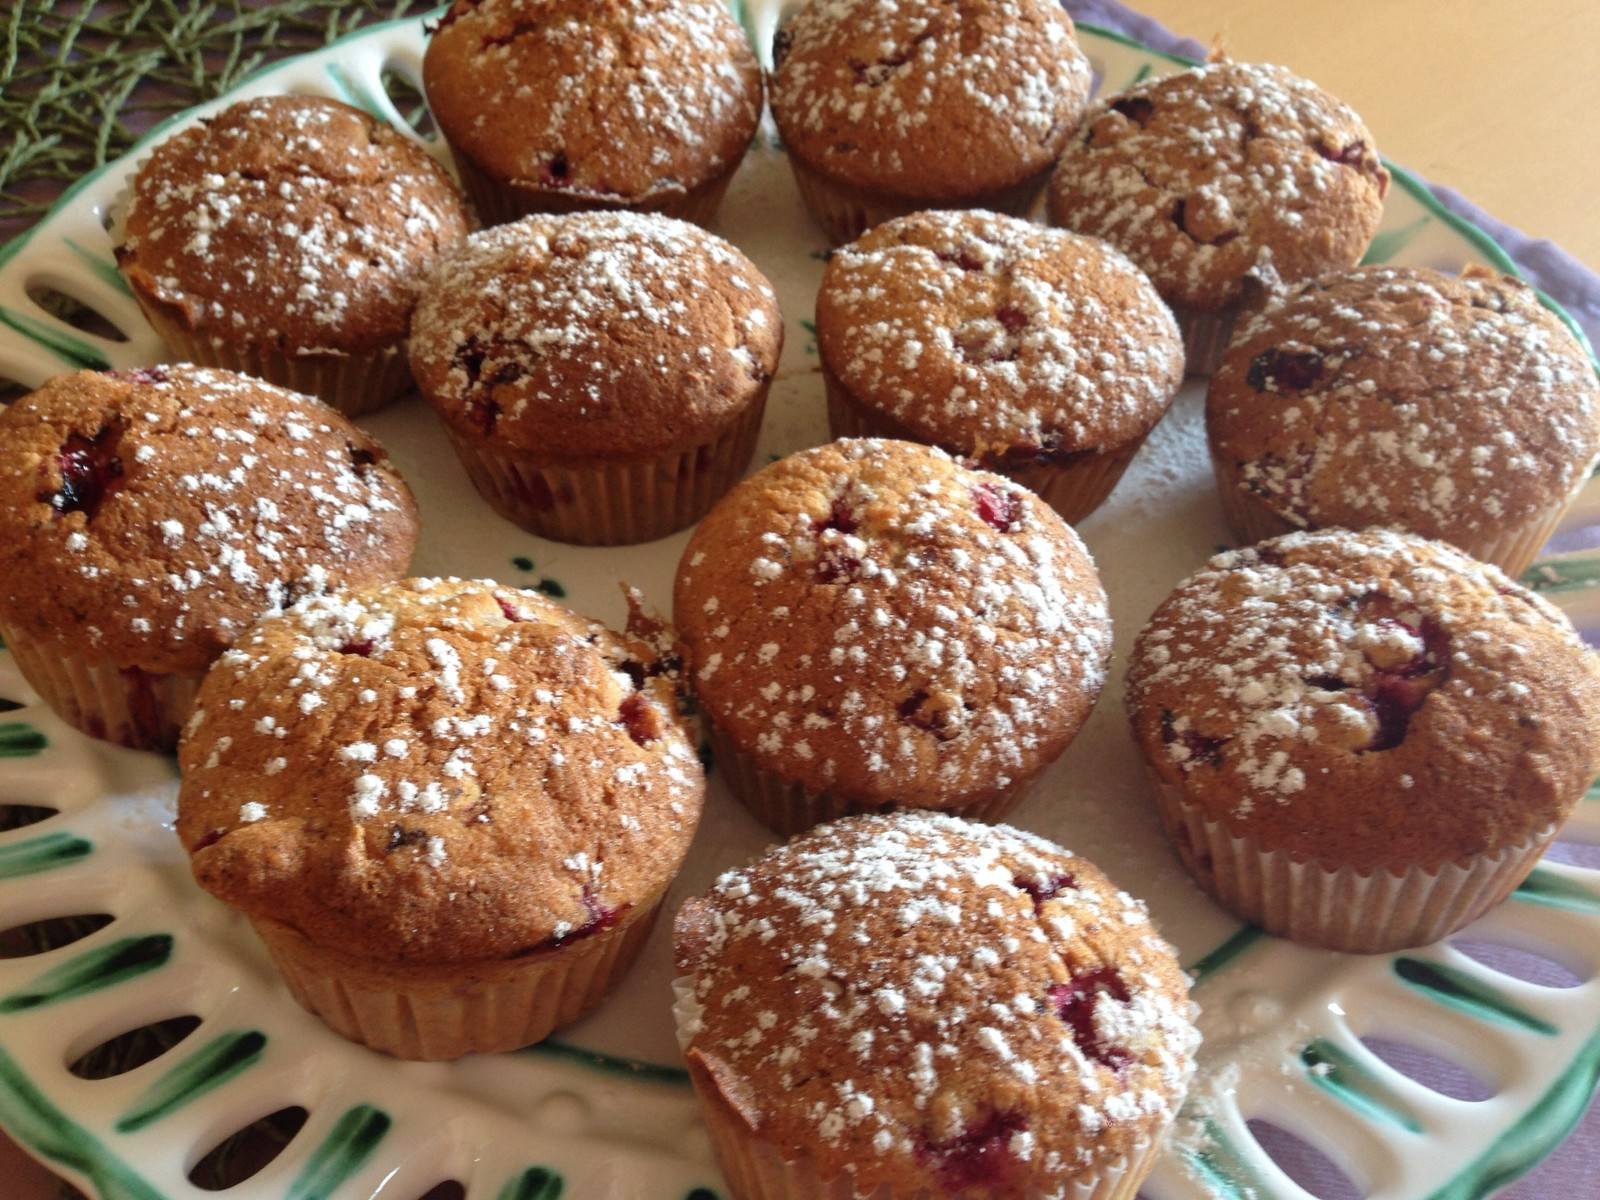 Ribisel-Haselnuss-Muffins